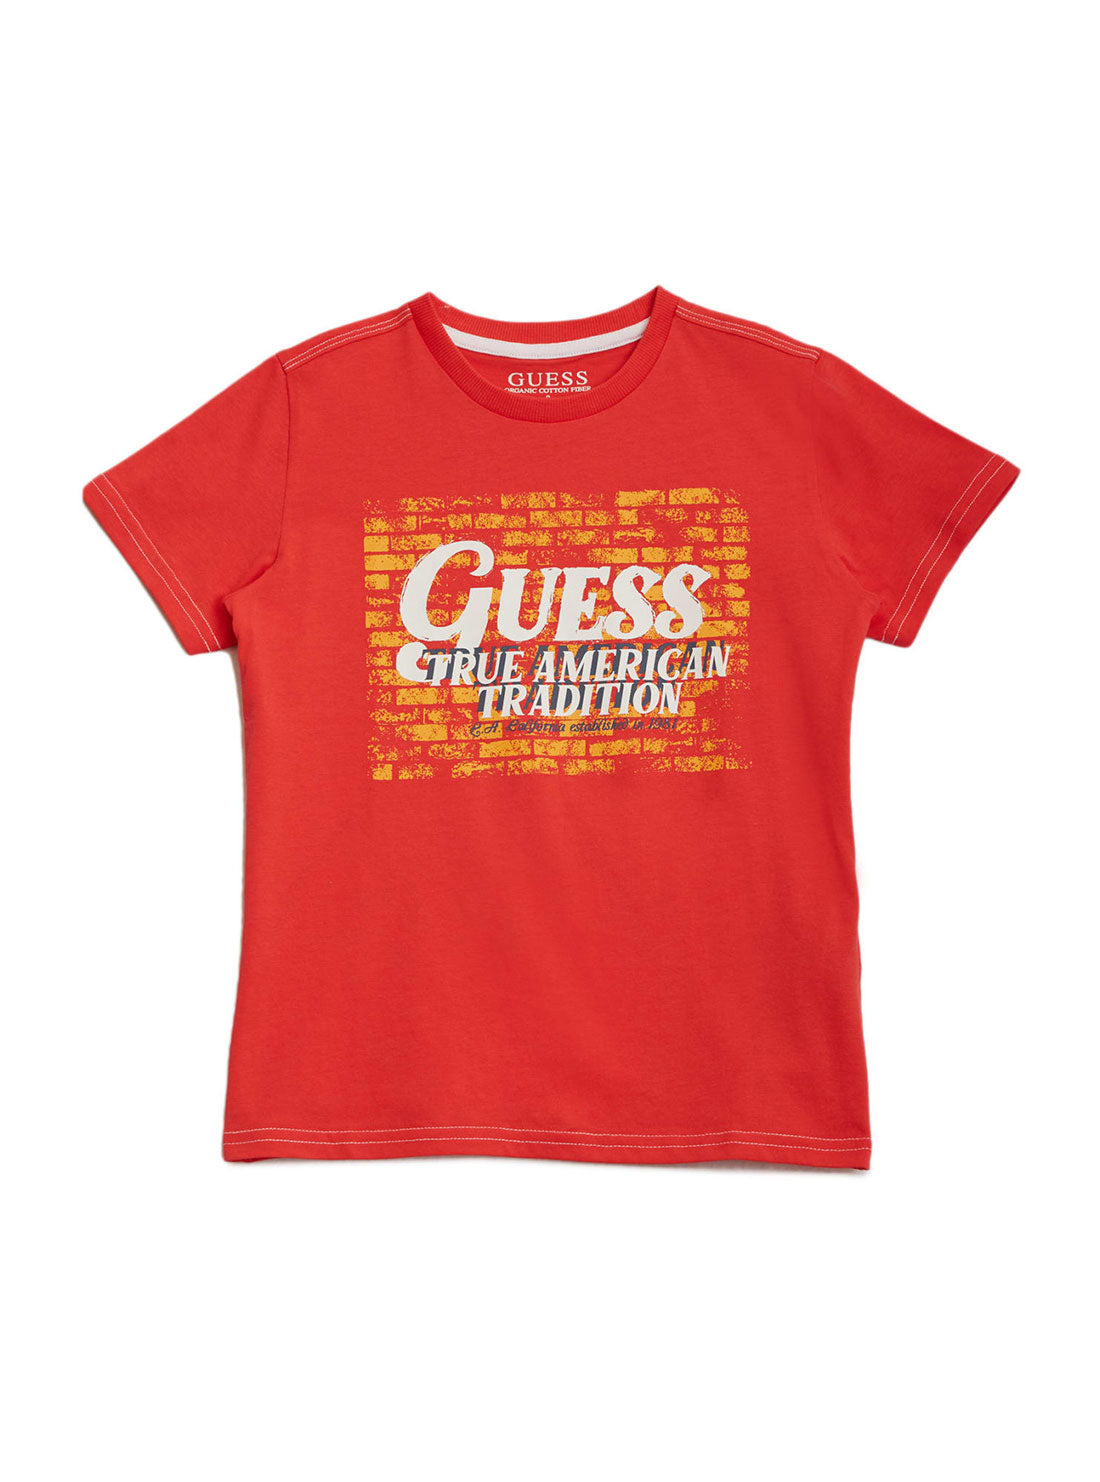 GUESS Kids Big Boy Red True American Tradition T-Shirt (7-16) L2GI00K8HM0 Front View